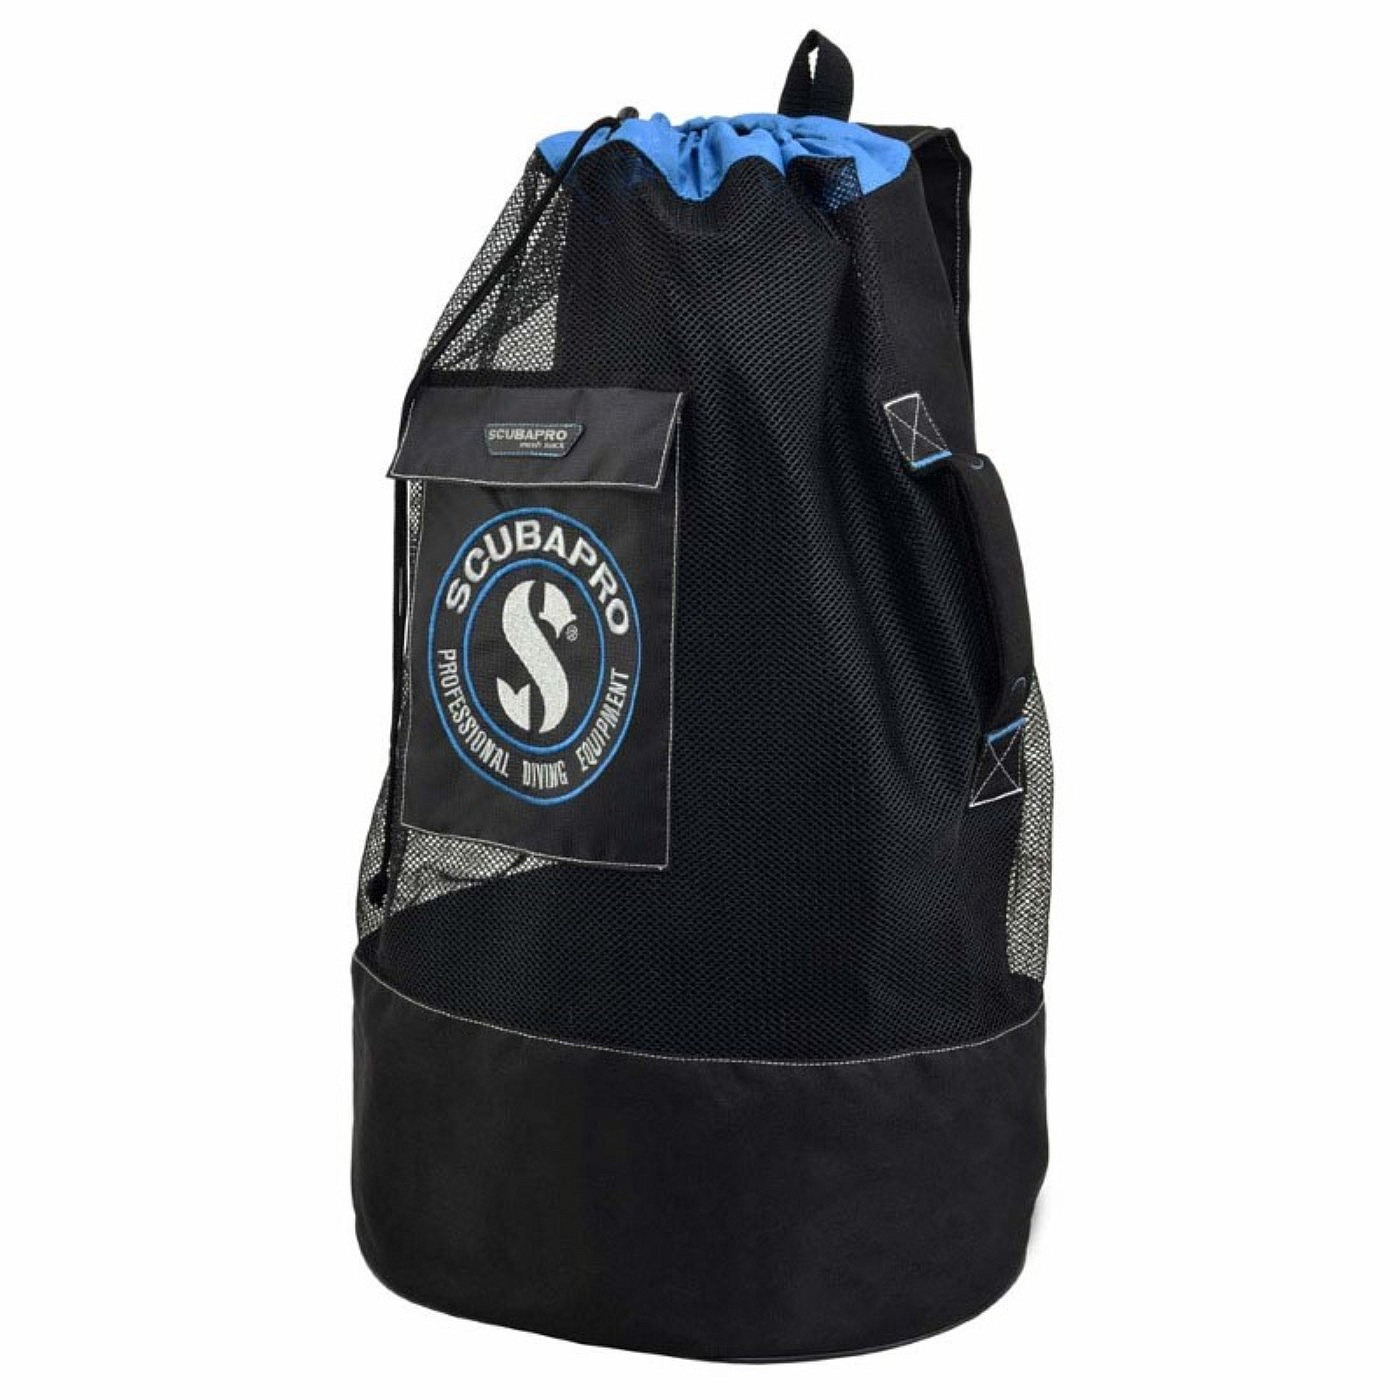 Scubapro Mesh Backpack | Backpack for diving equipment